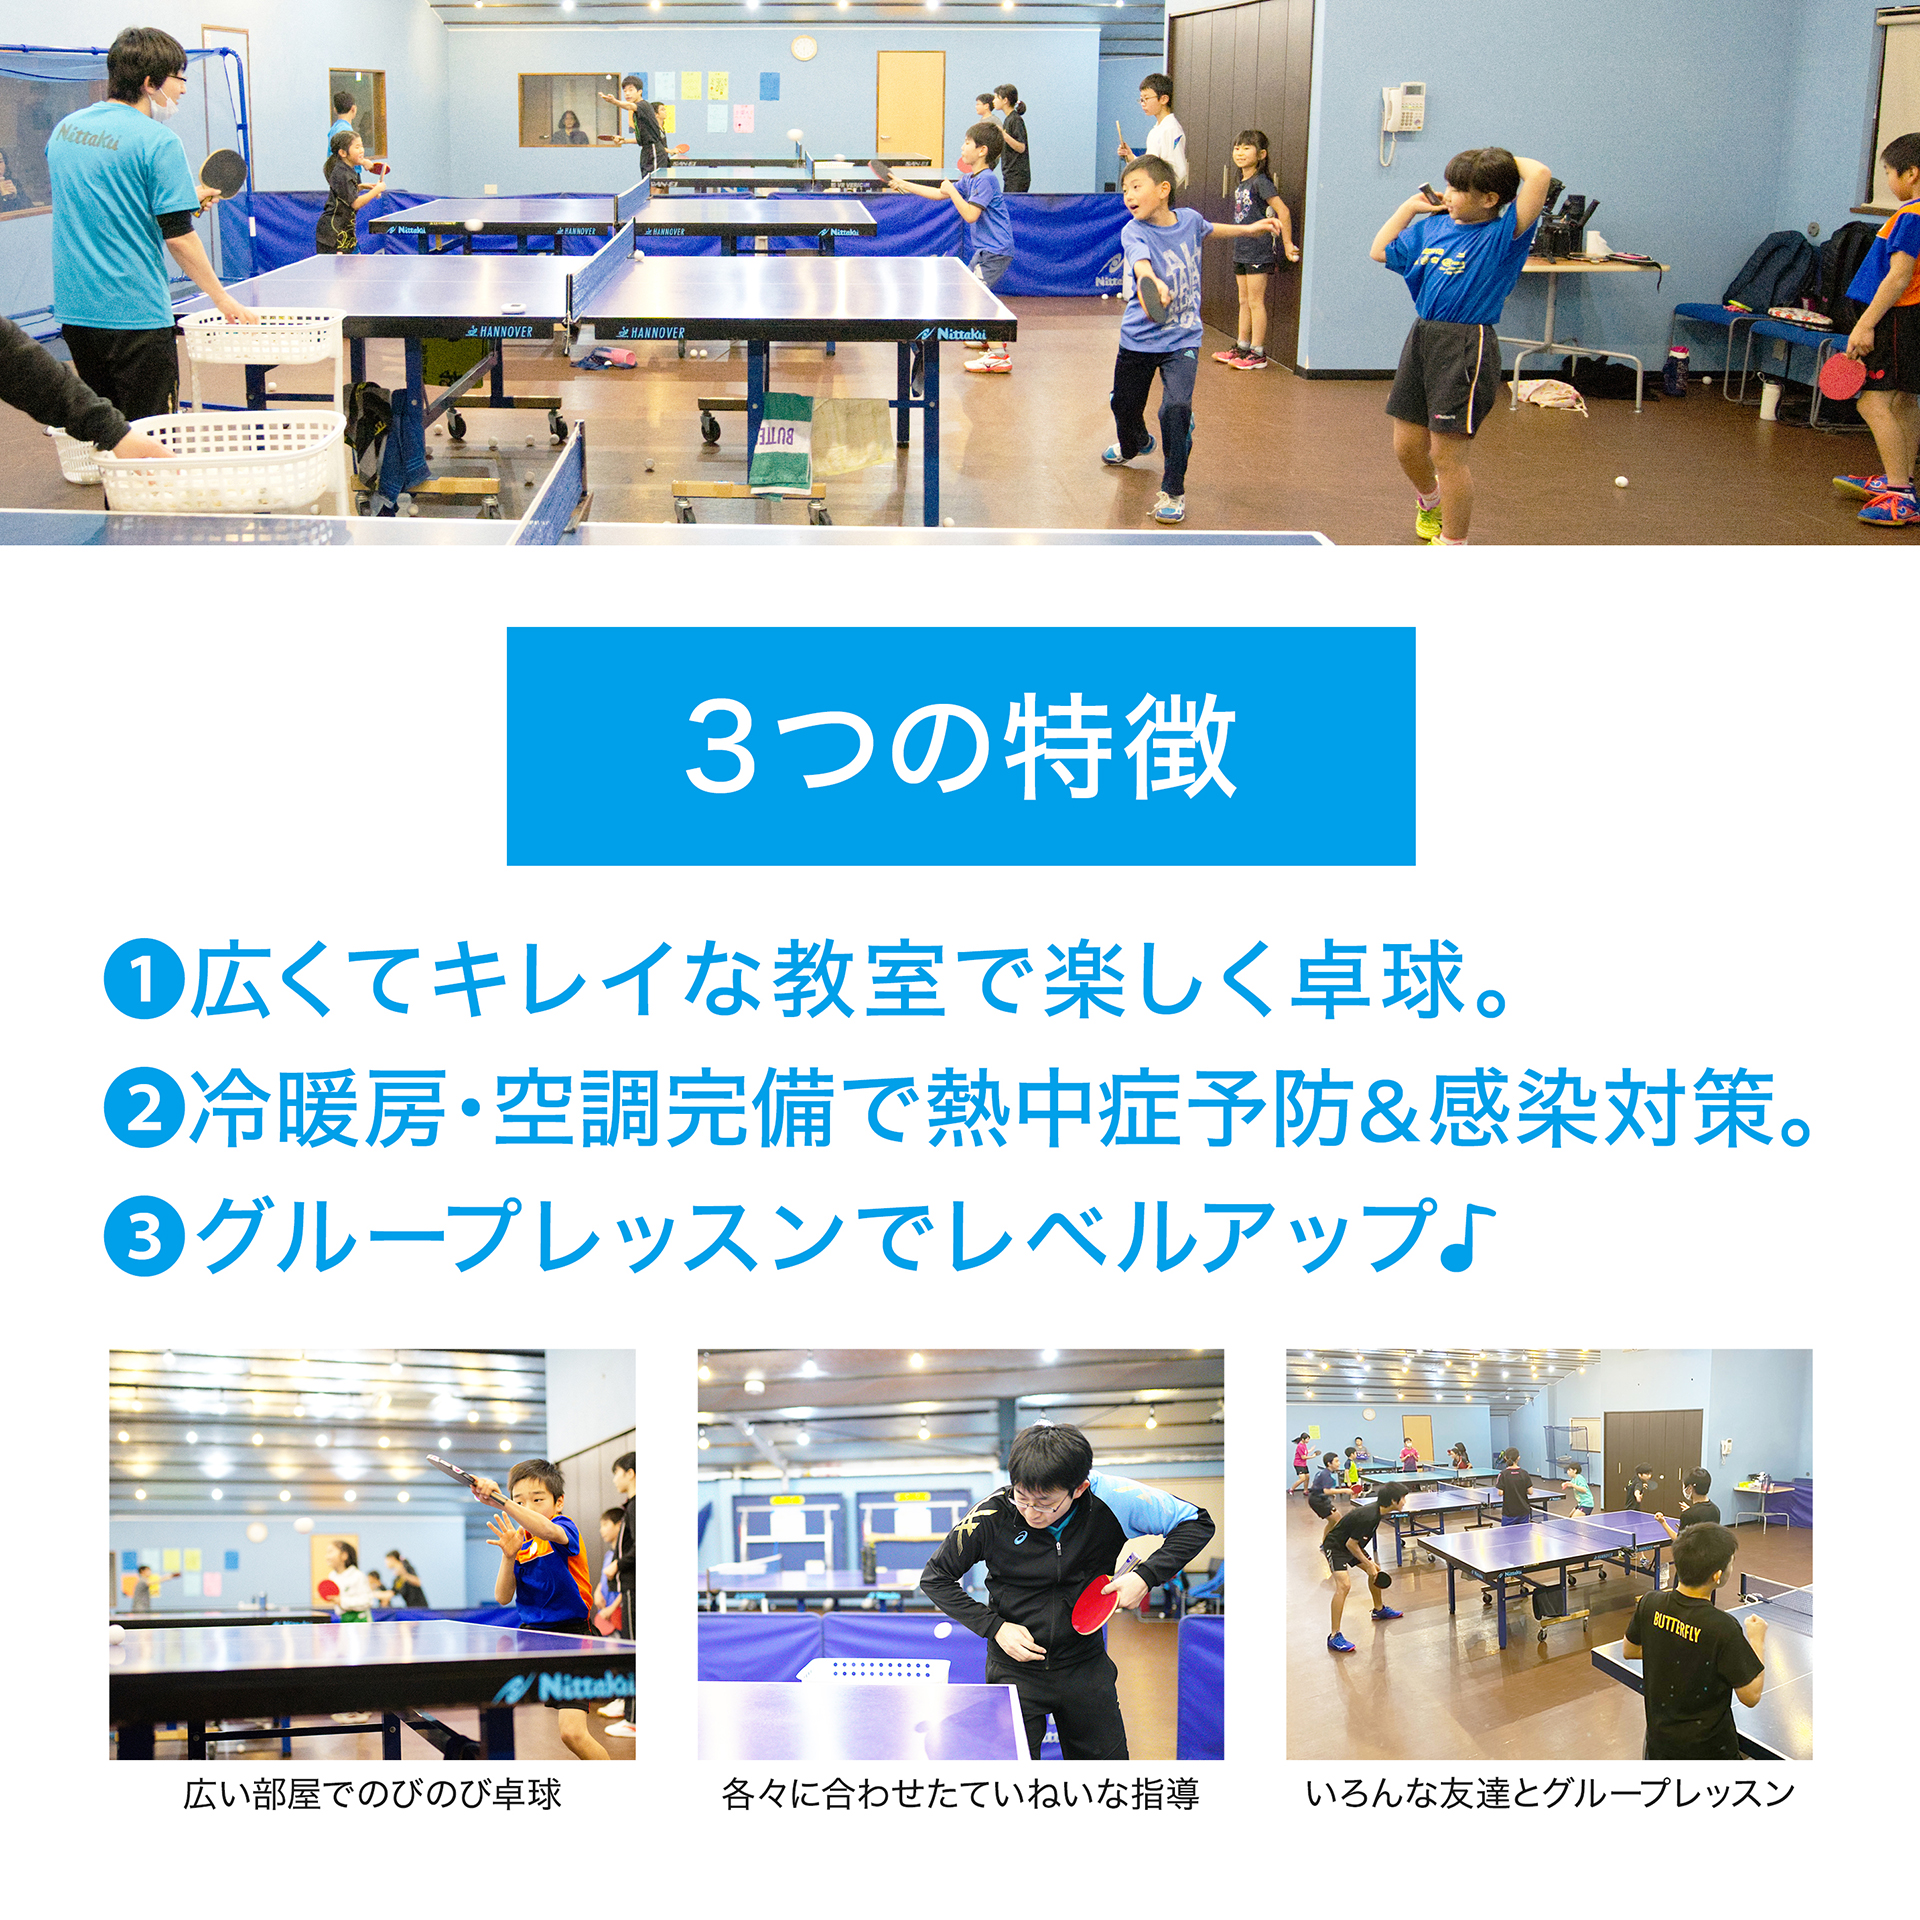 須磨の卓球教室,夏休み,ジュニア教室,須磨区,白川台,神戸市,無料体験,卓球体験会